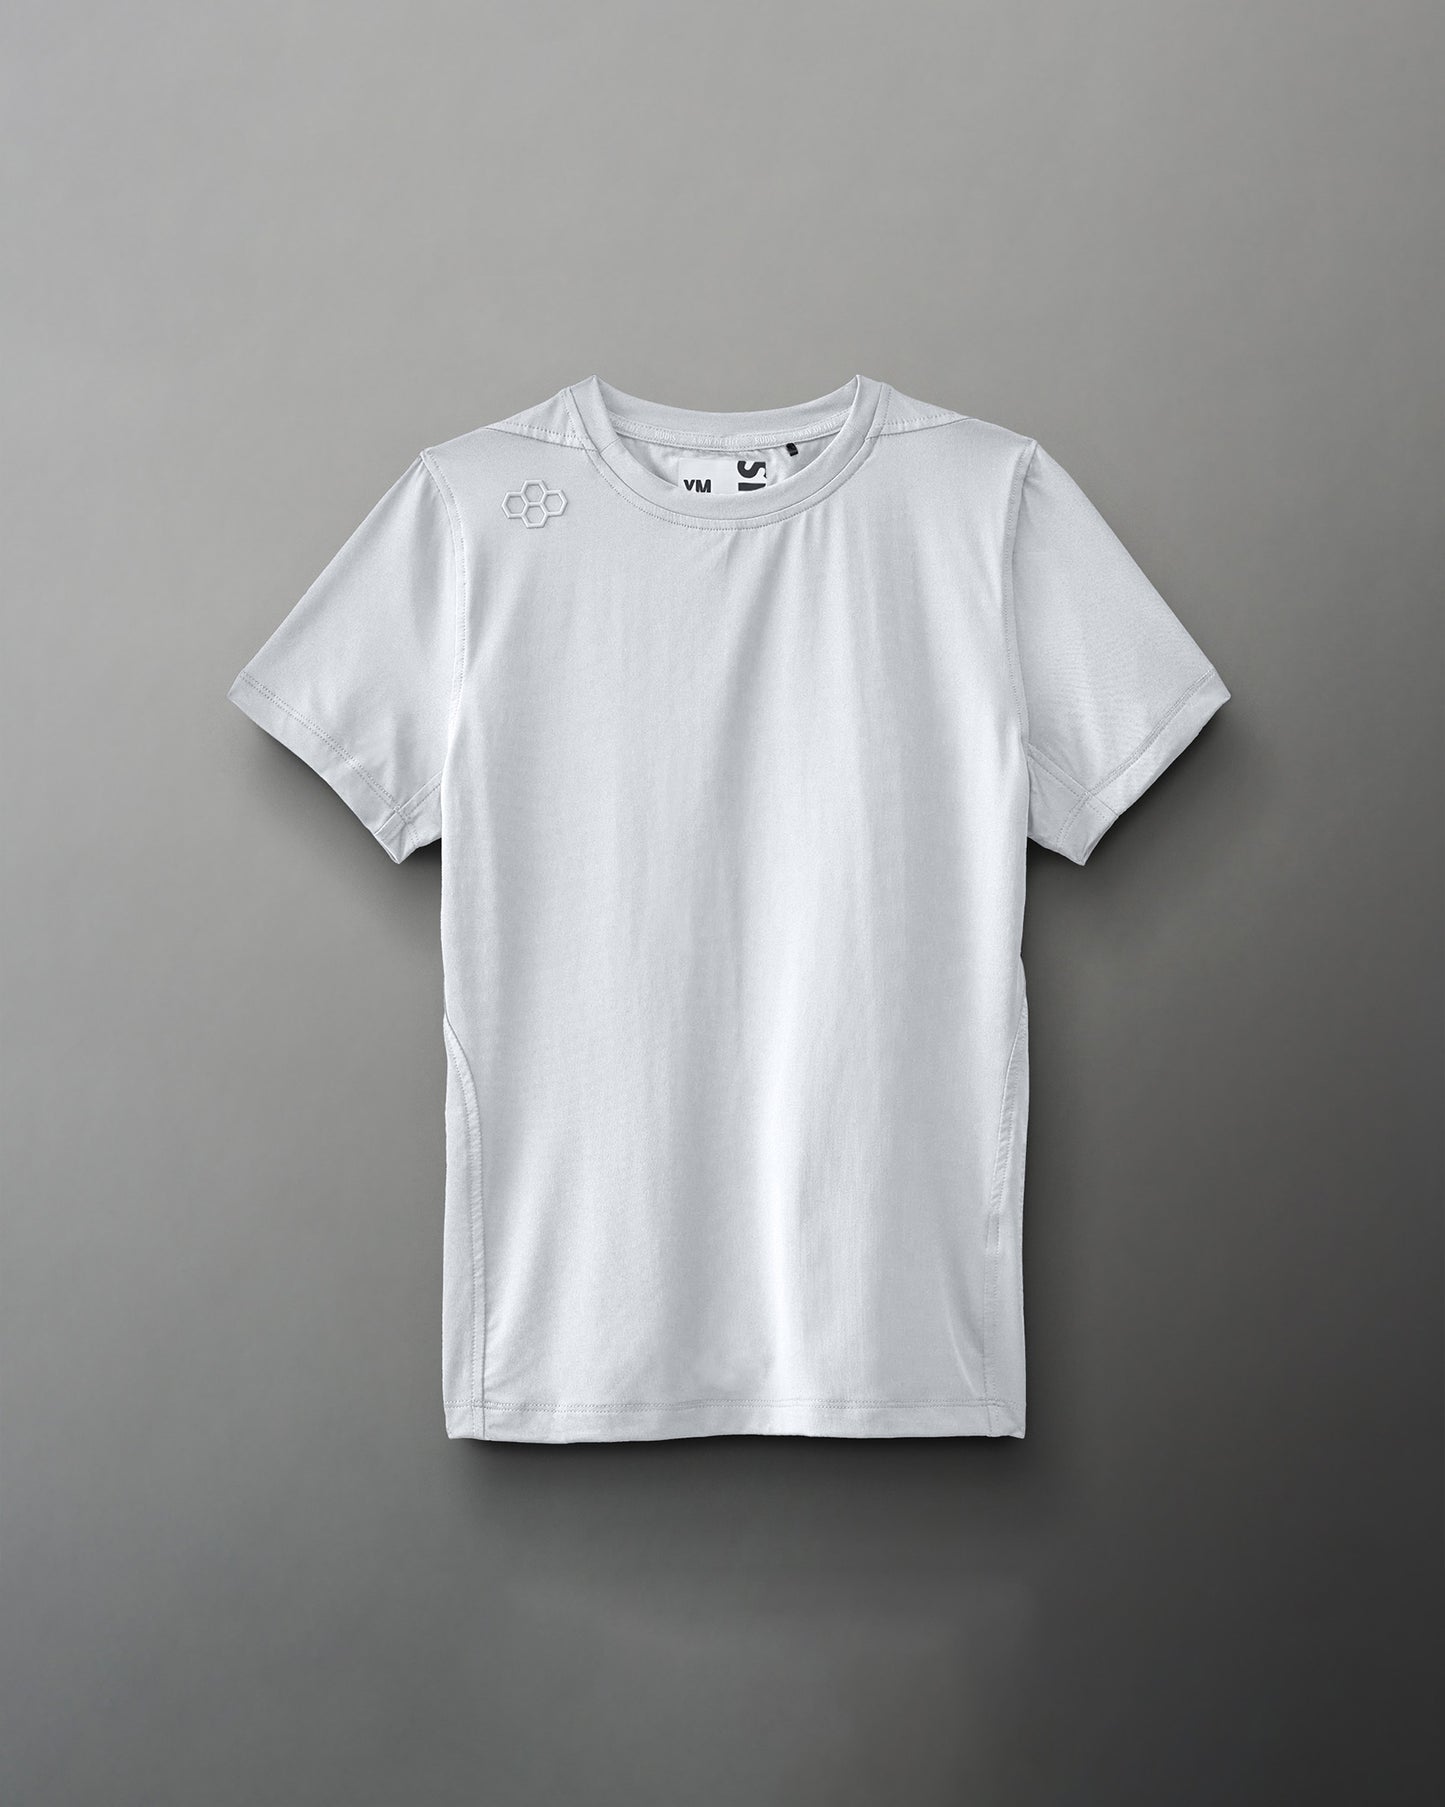 RUDIS Performance Youth T-Shirt - Lunar Gray